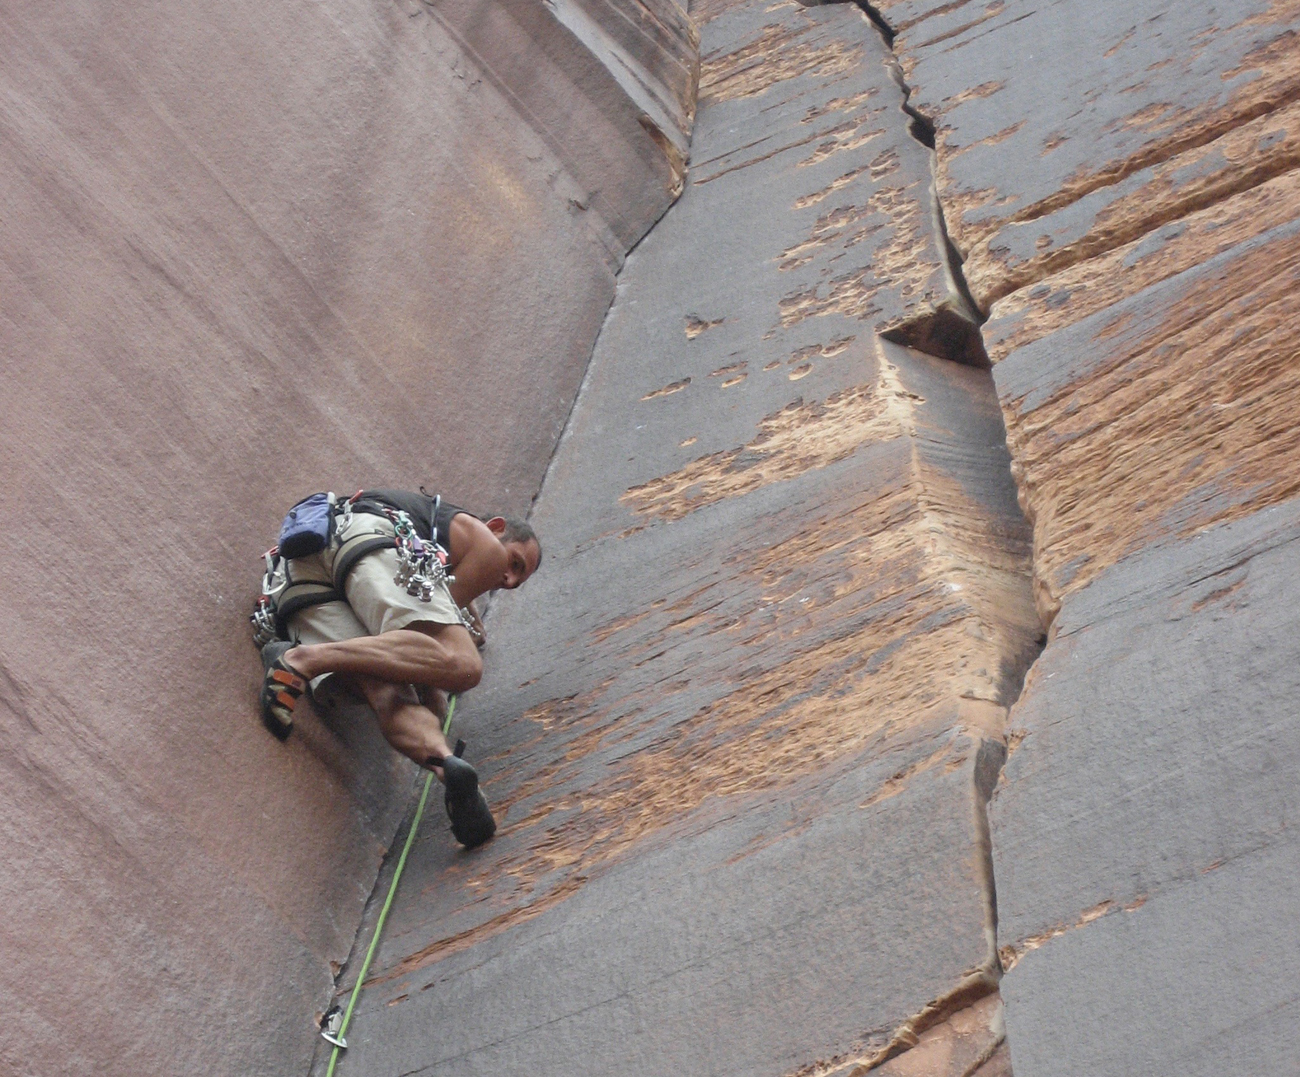 Romain climbing a big wall